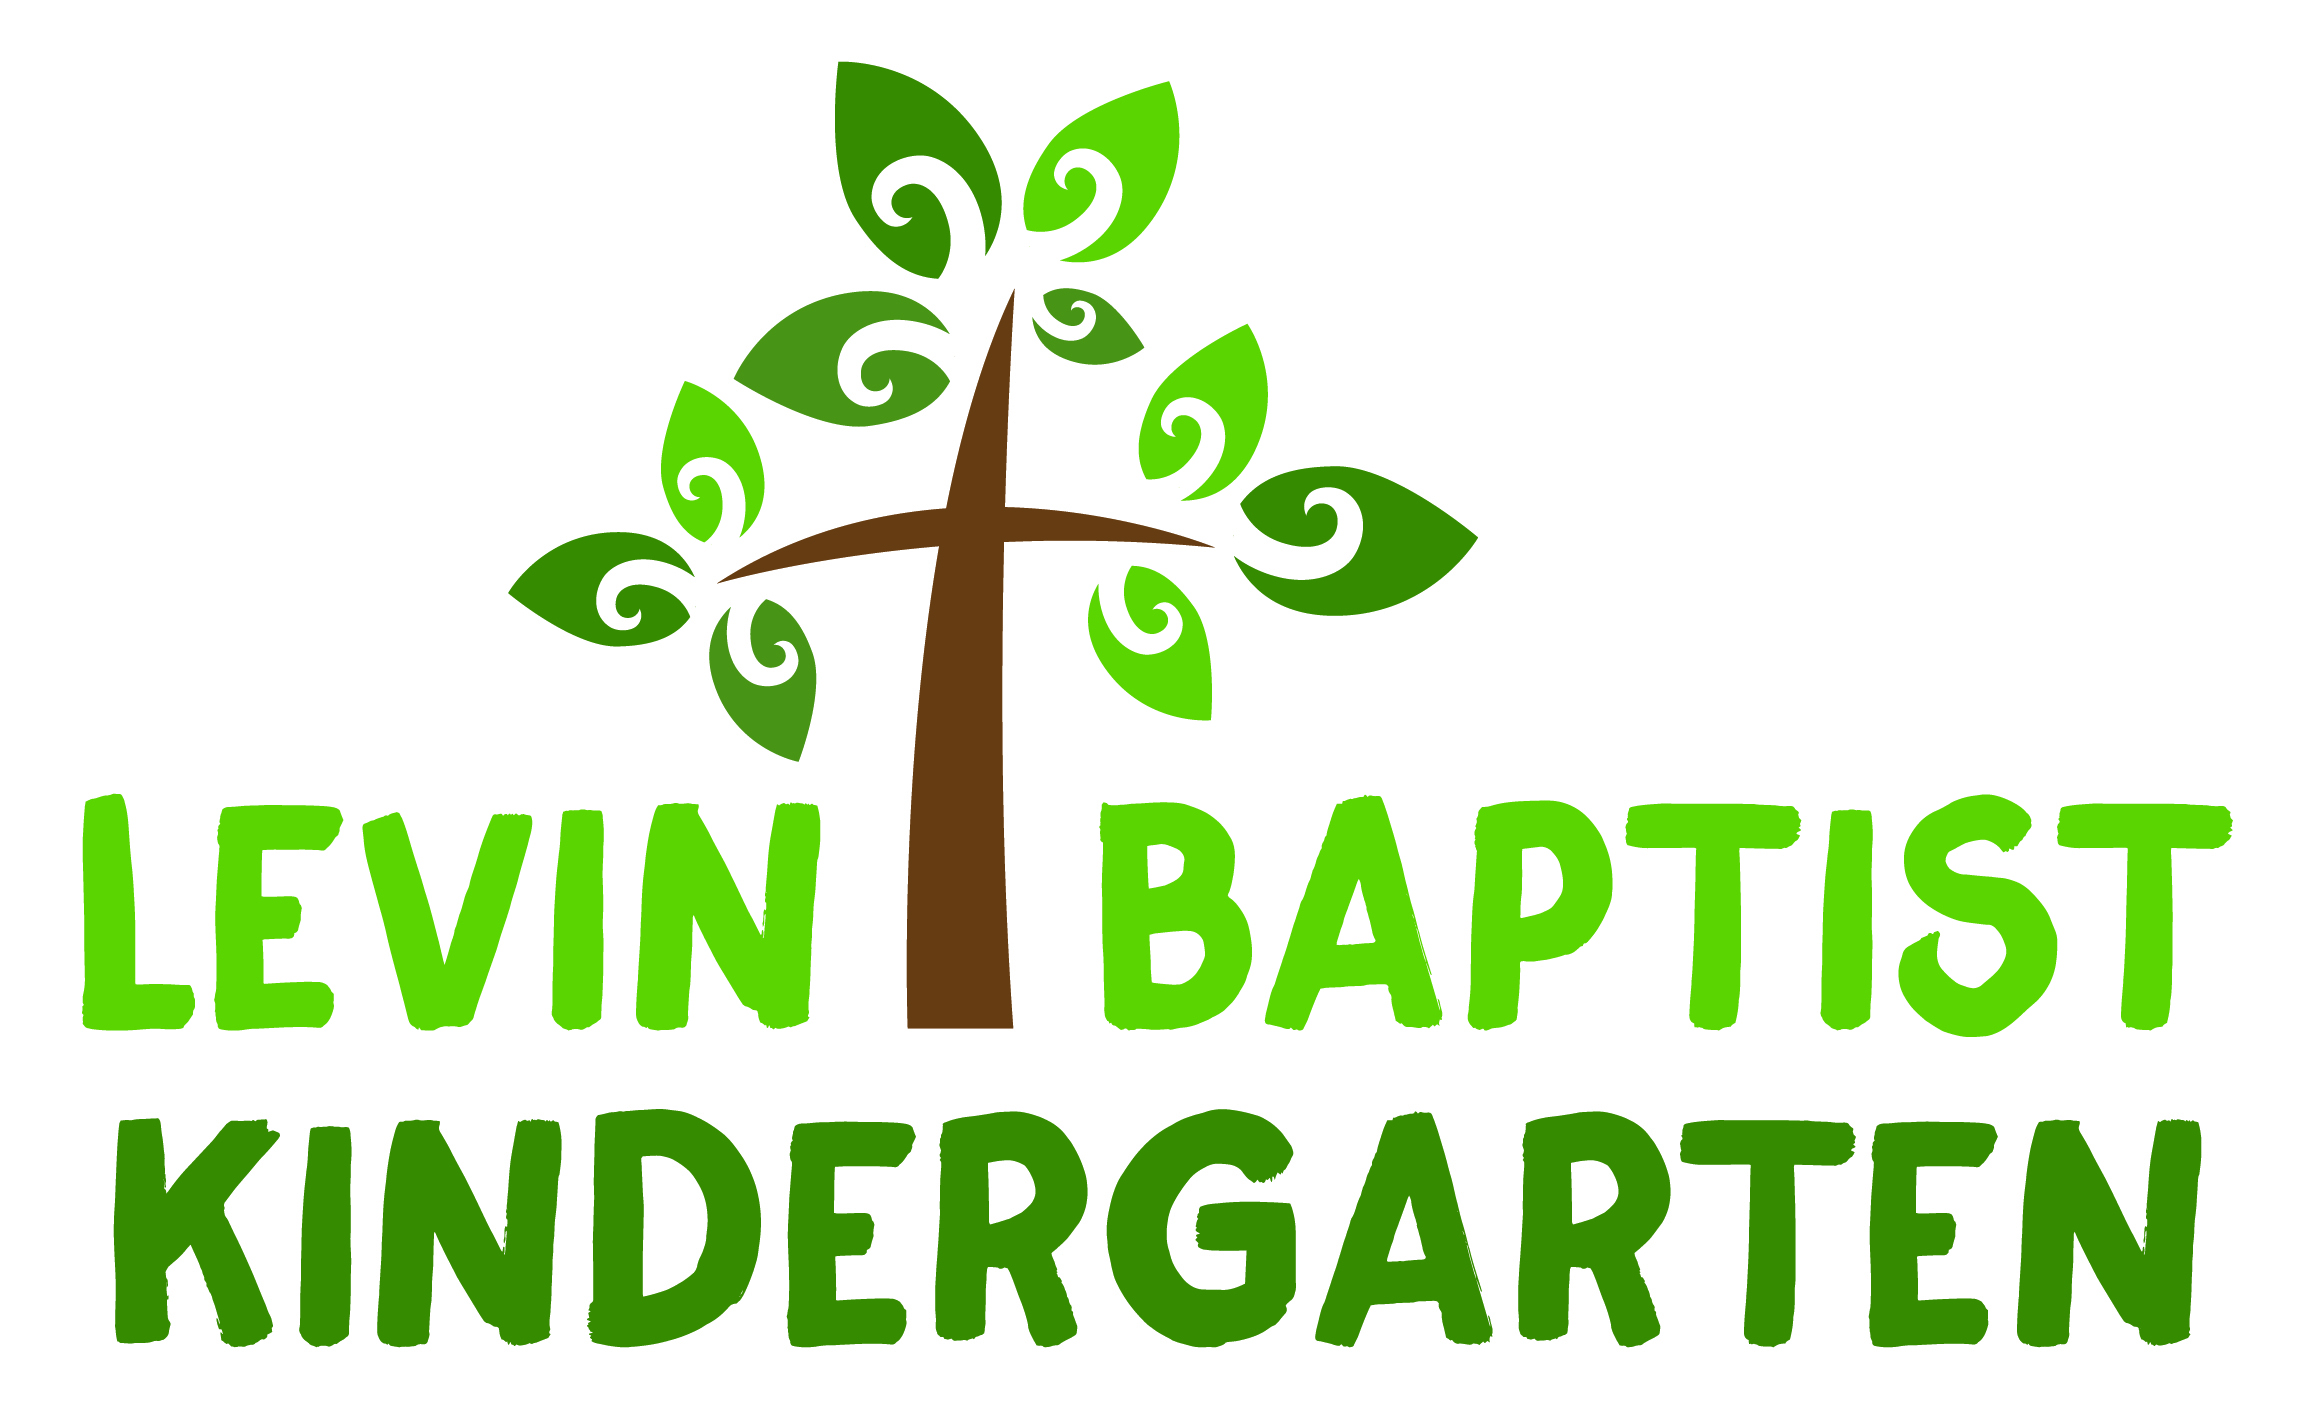 Levin Baptist Kindergarten